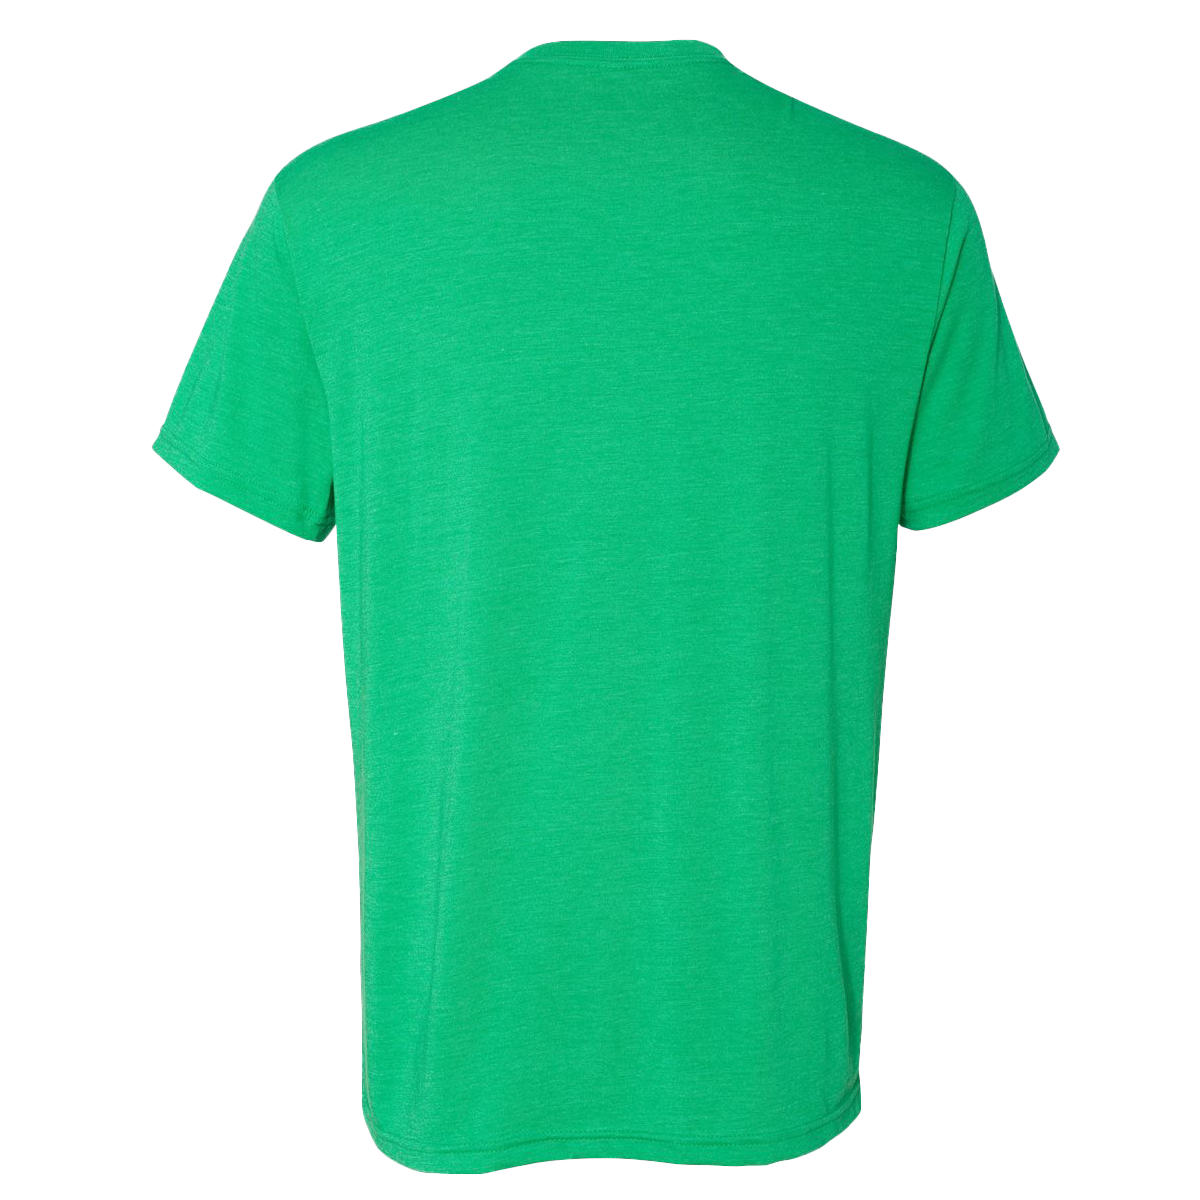 DraftKings Draft Me I'm Irish T-Shirt